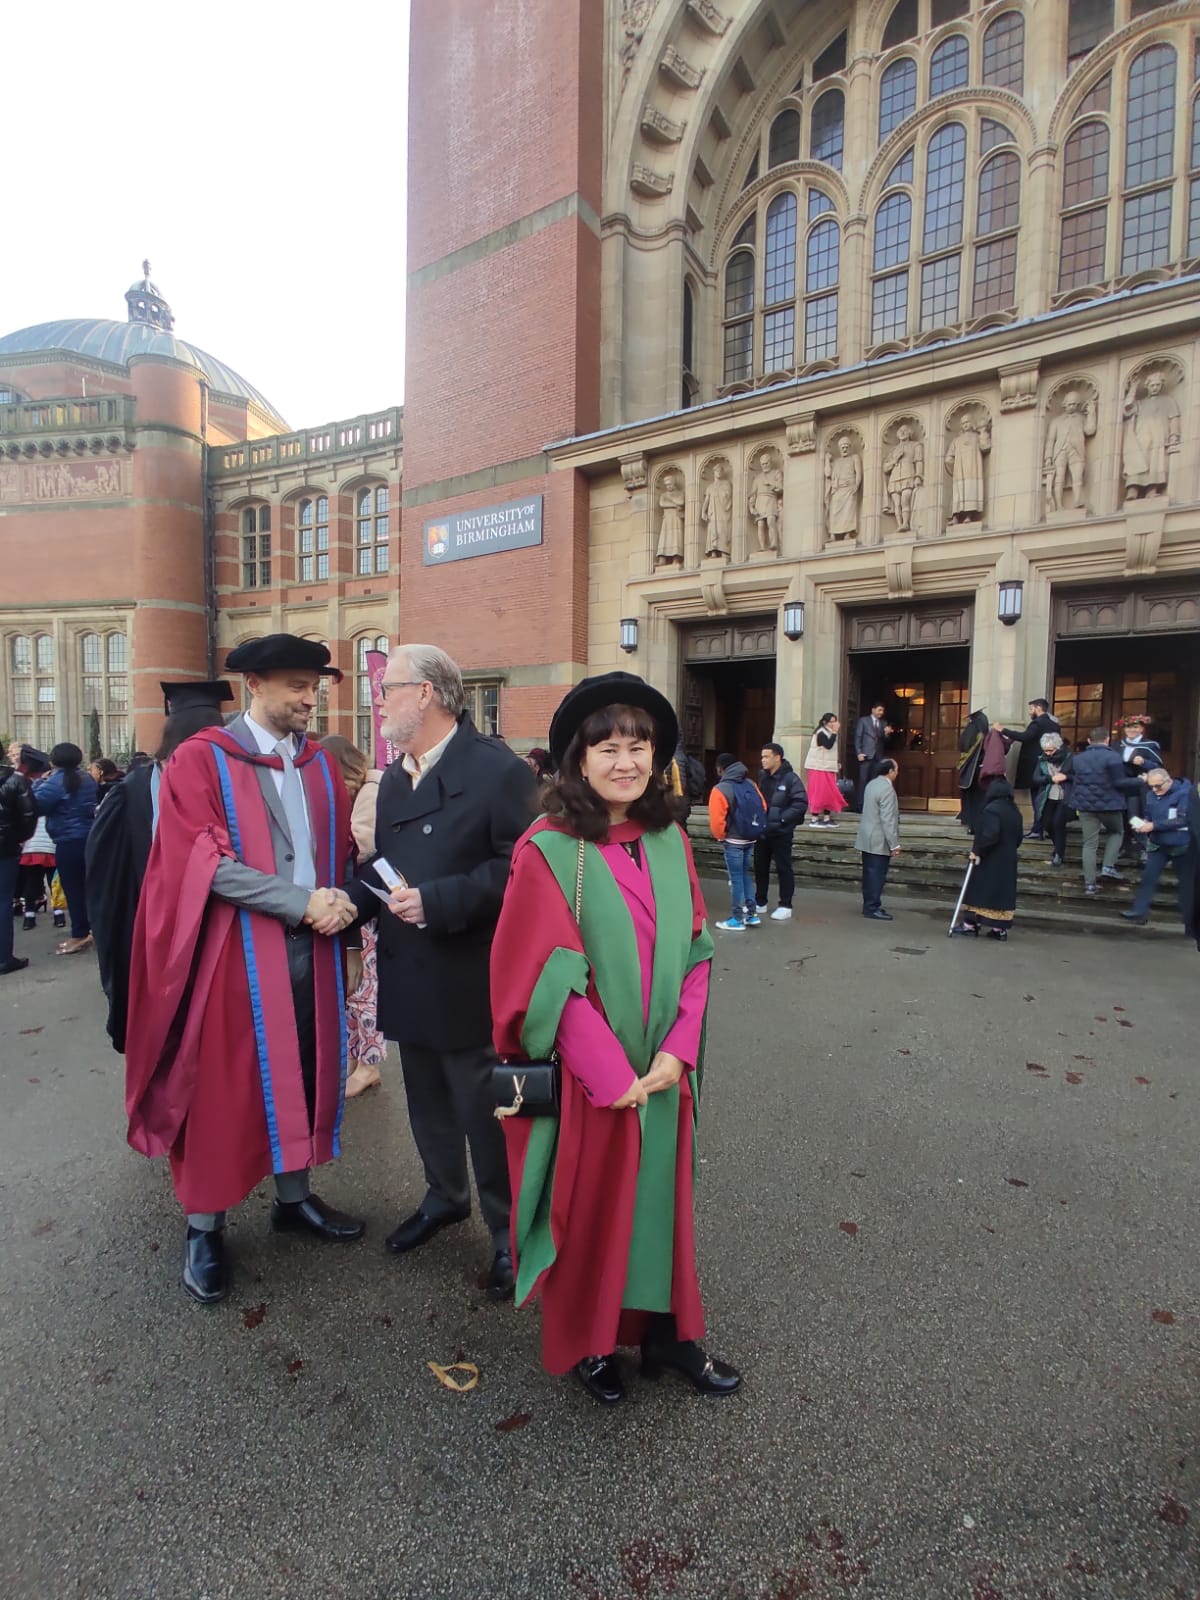 The graduation ceremony for graduates of the University of Birmingham